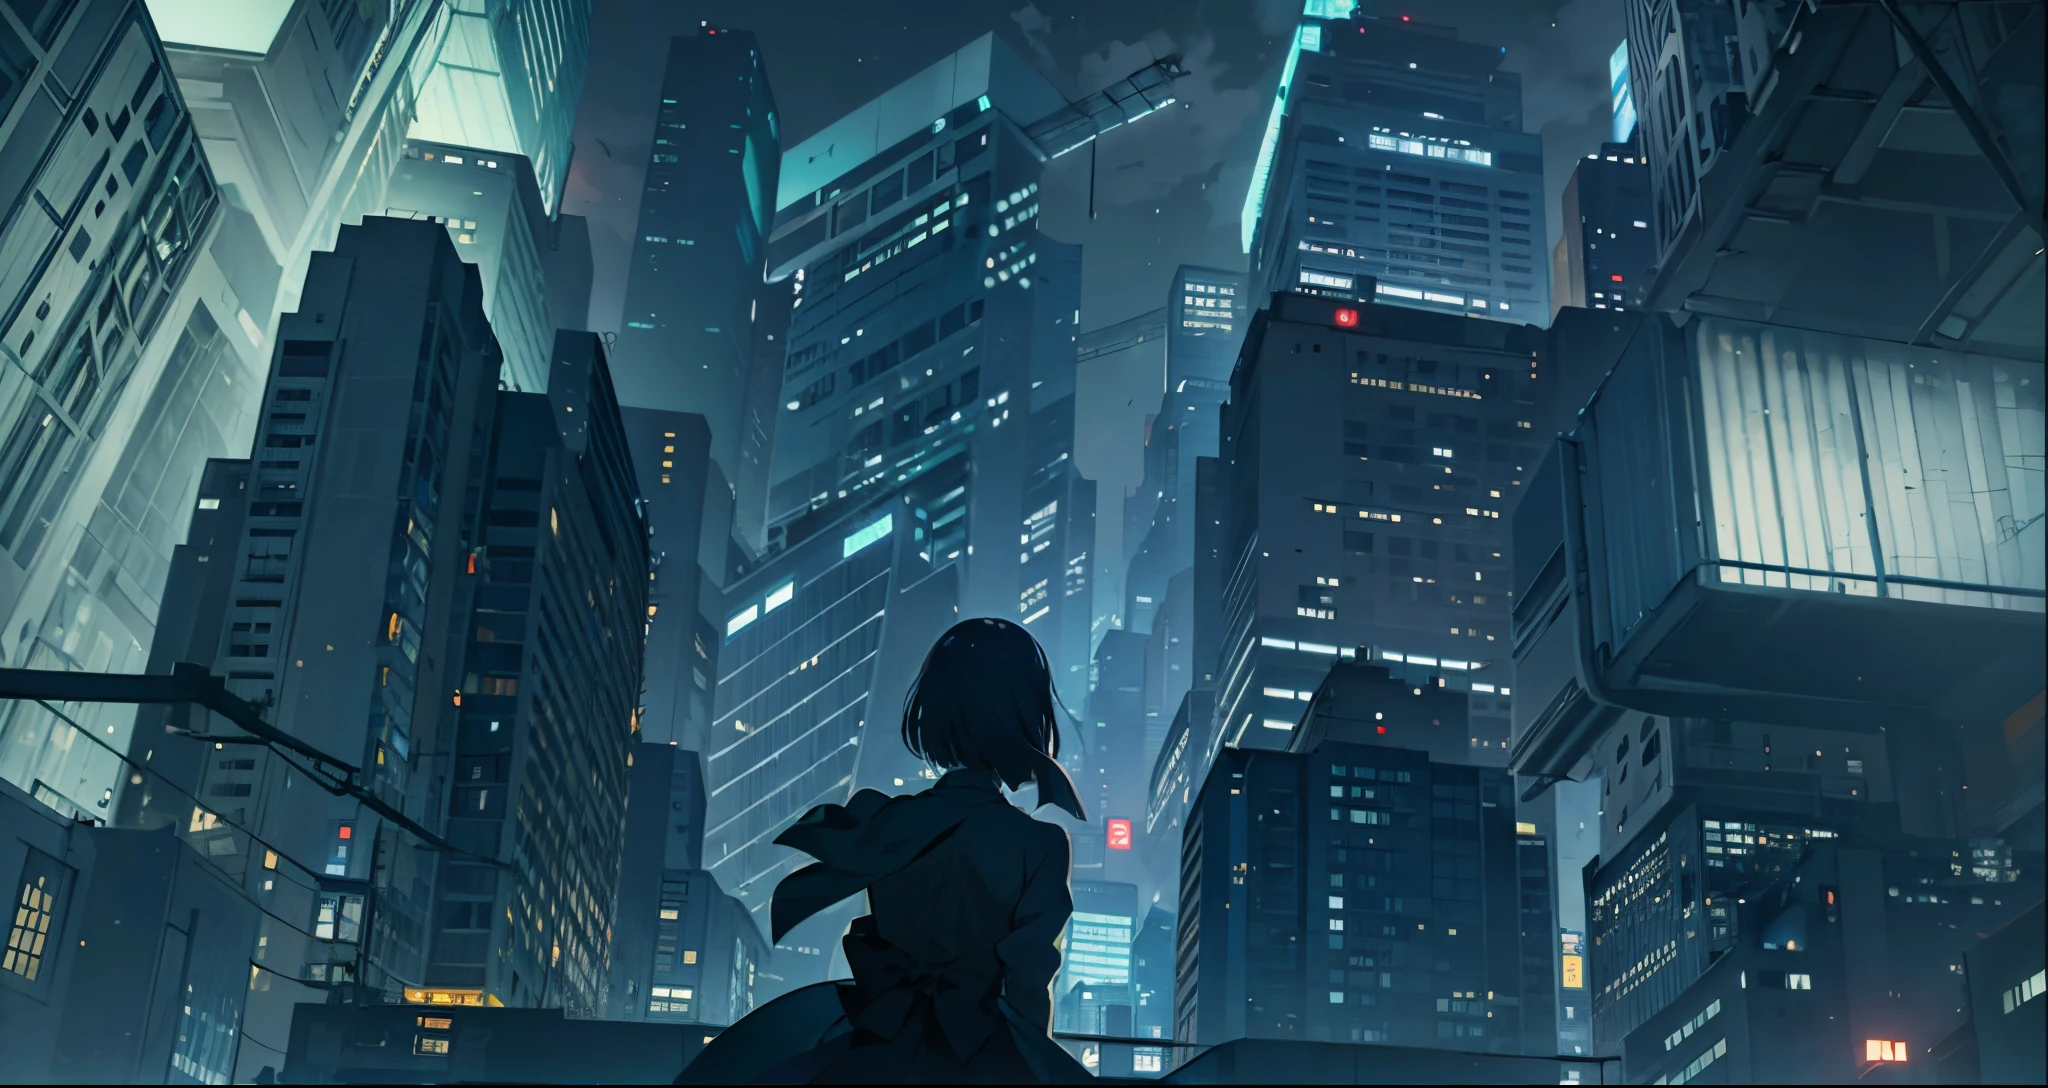 1 chica muñeca anime, solo, bob corto, tiro cenital, (vista trasera:1.5), vista nocturna de rascacielos, grano de la película, luz cinemática.